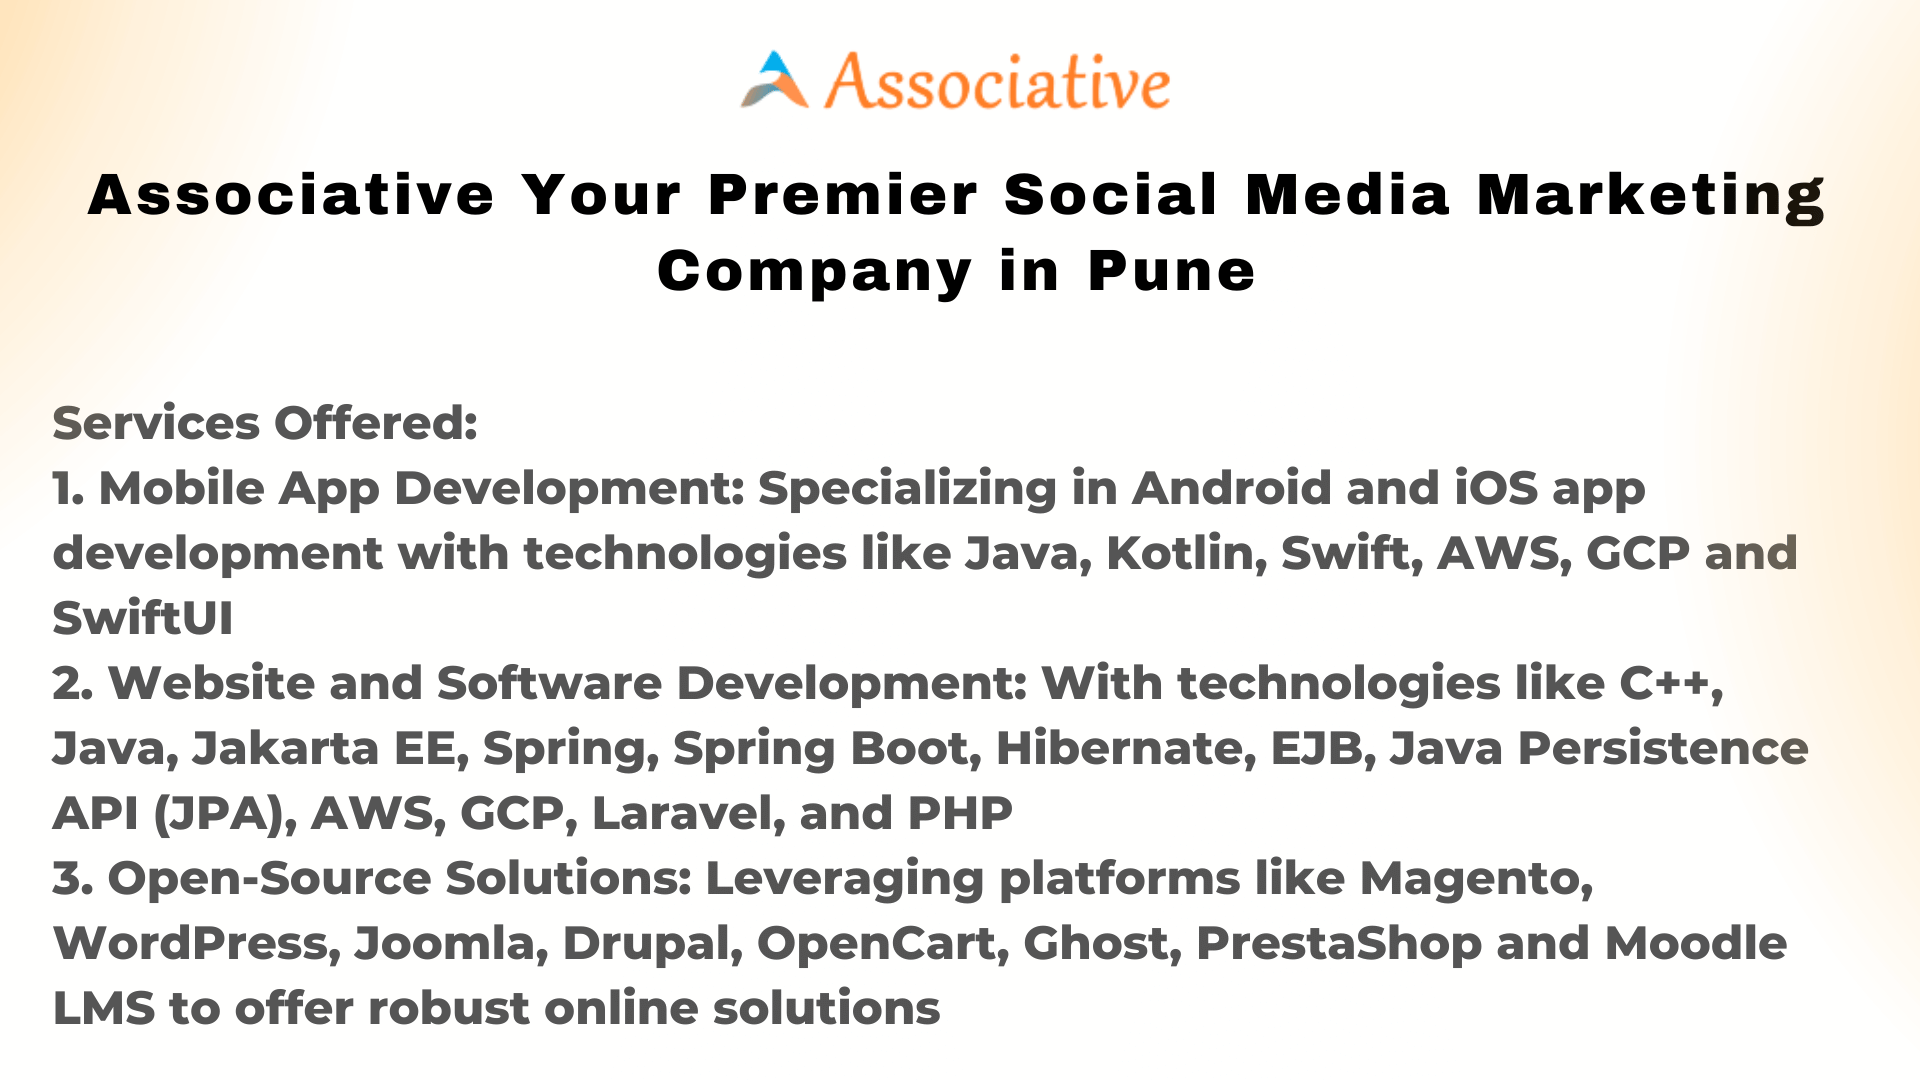 Associative Your Premier Social Media Marketing Company in Pune